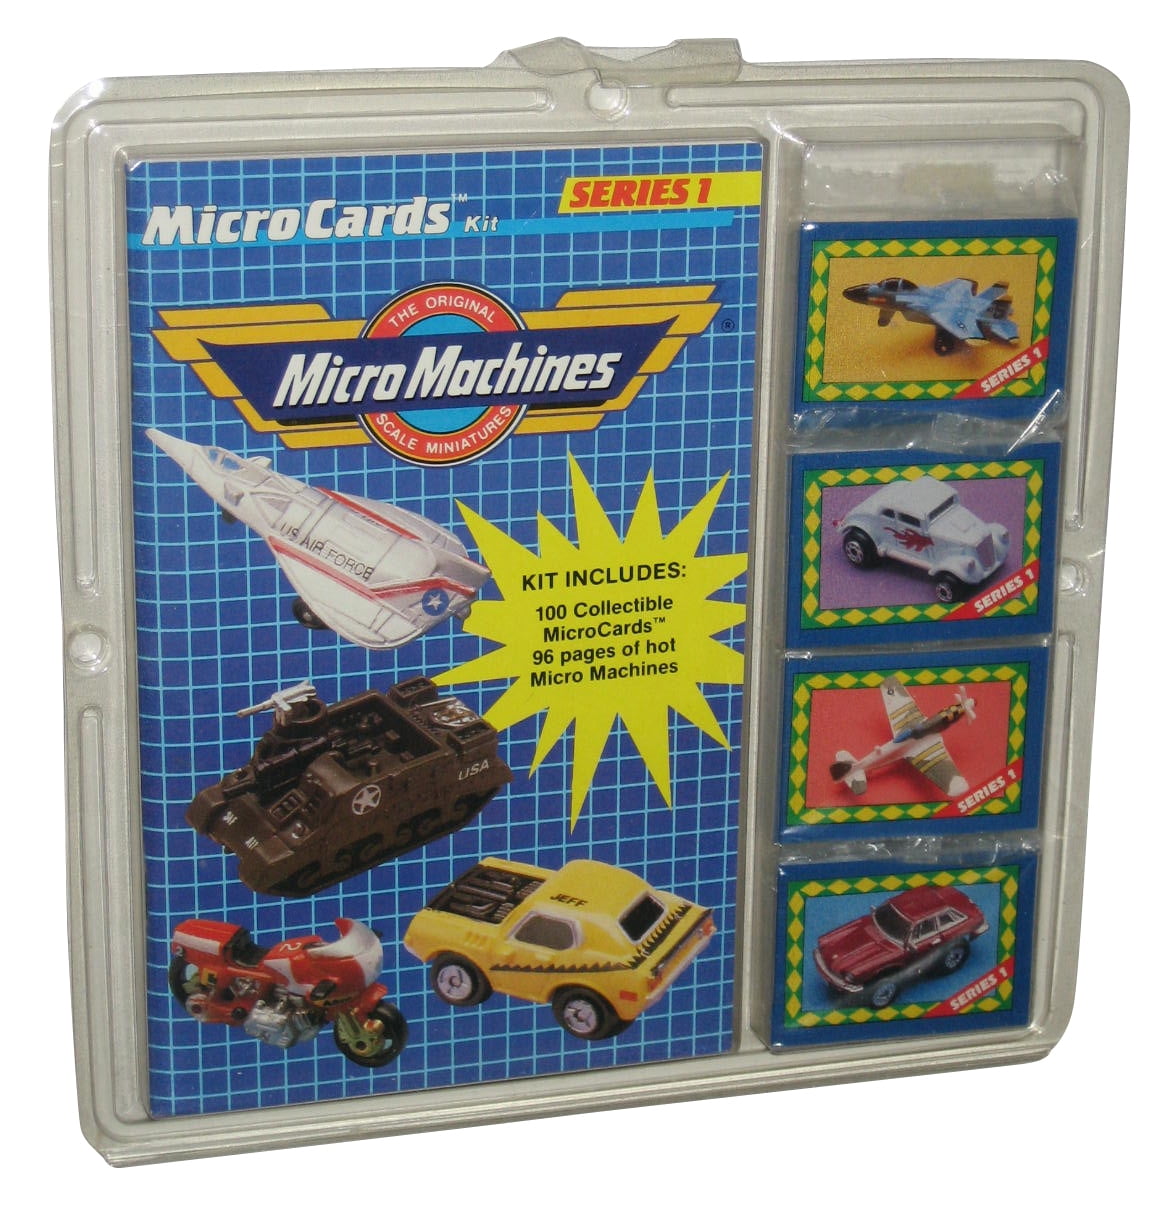 Micro Machines Microcards Series 1 